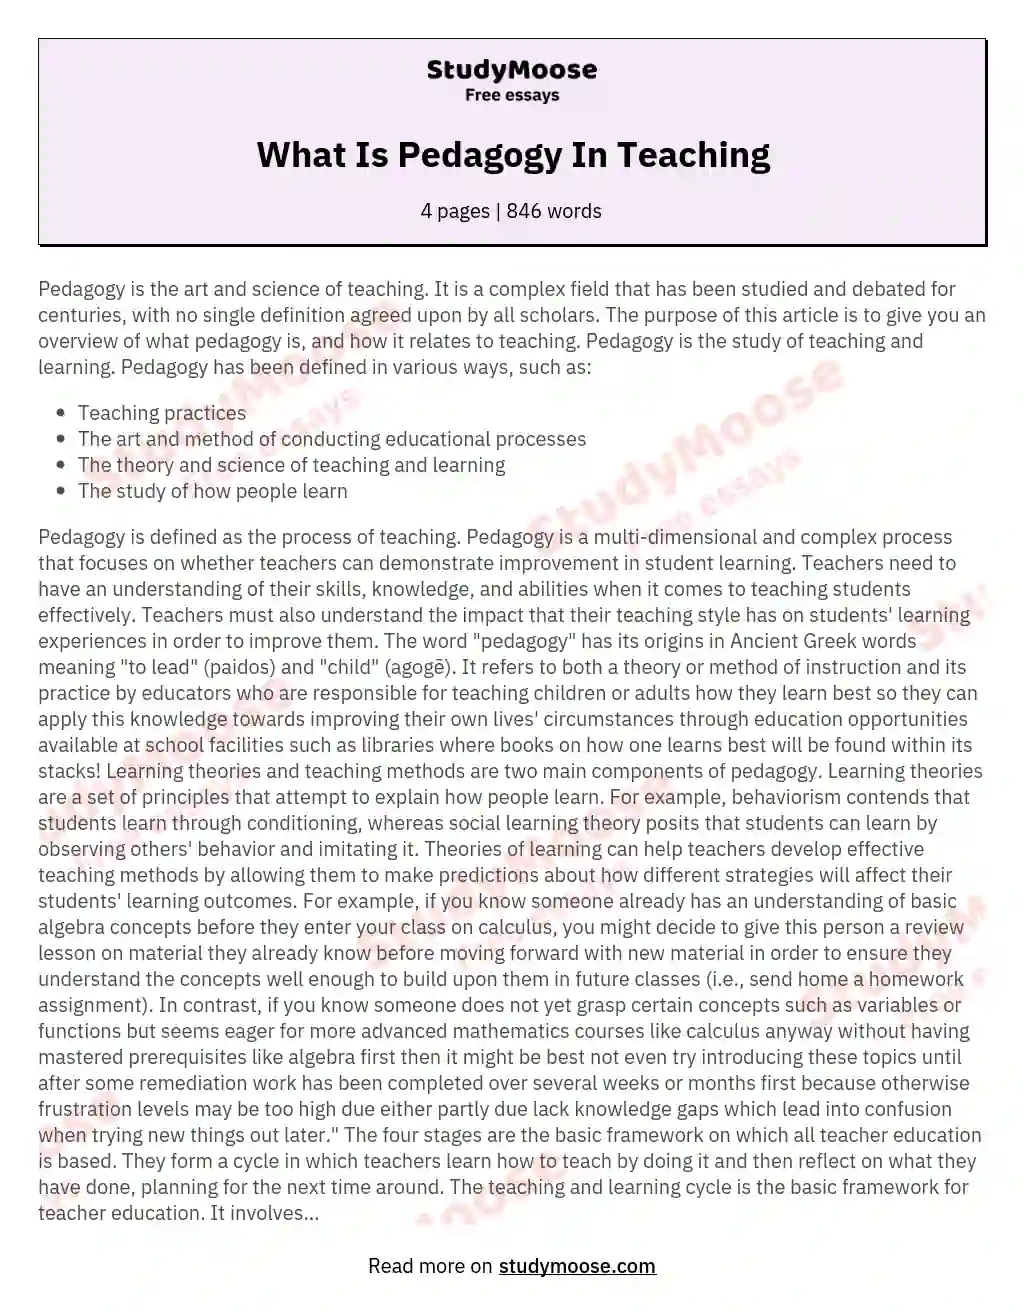 What Is Pedagogy In Teaching essay